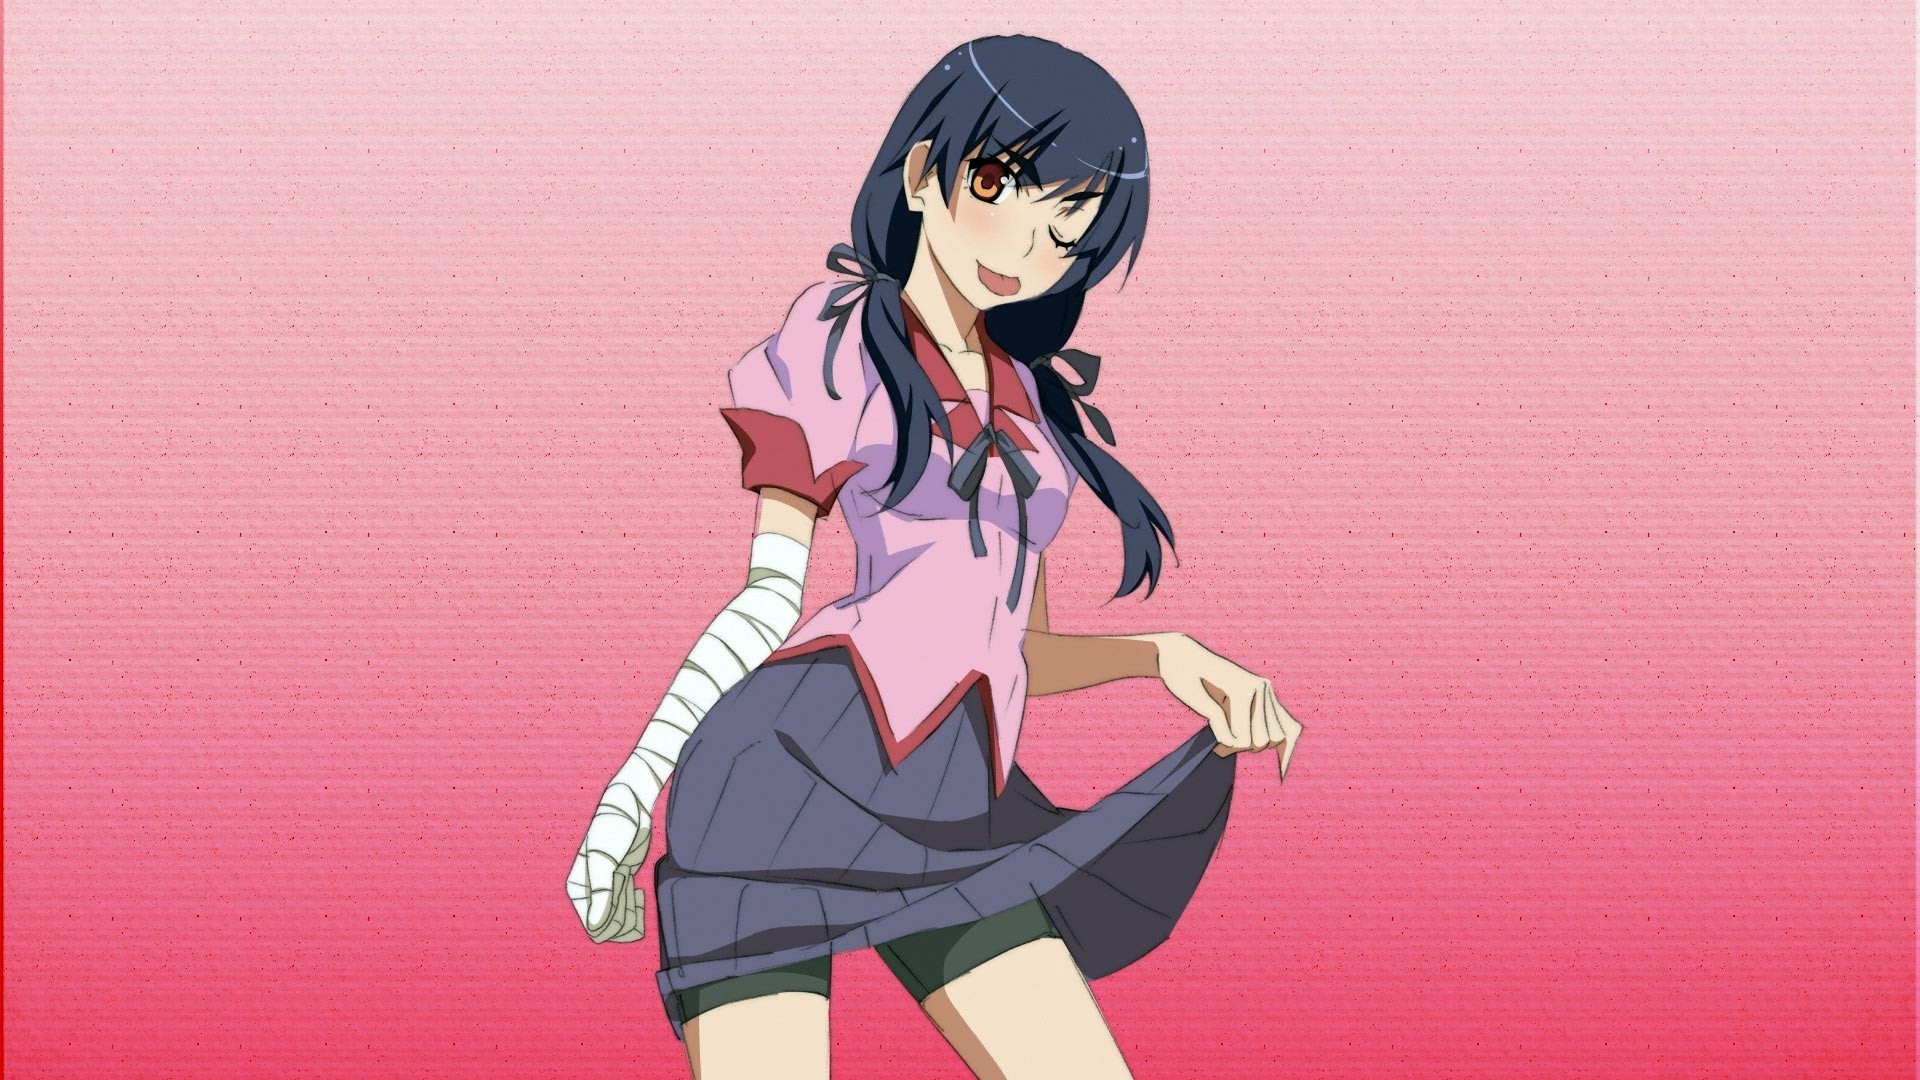 Monogatari Series, School Uniform, Anime, Anime Girls, Twintails, Kanbaru Suruga Wallpaper